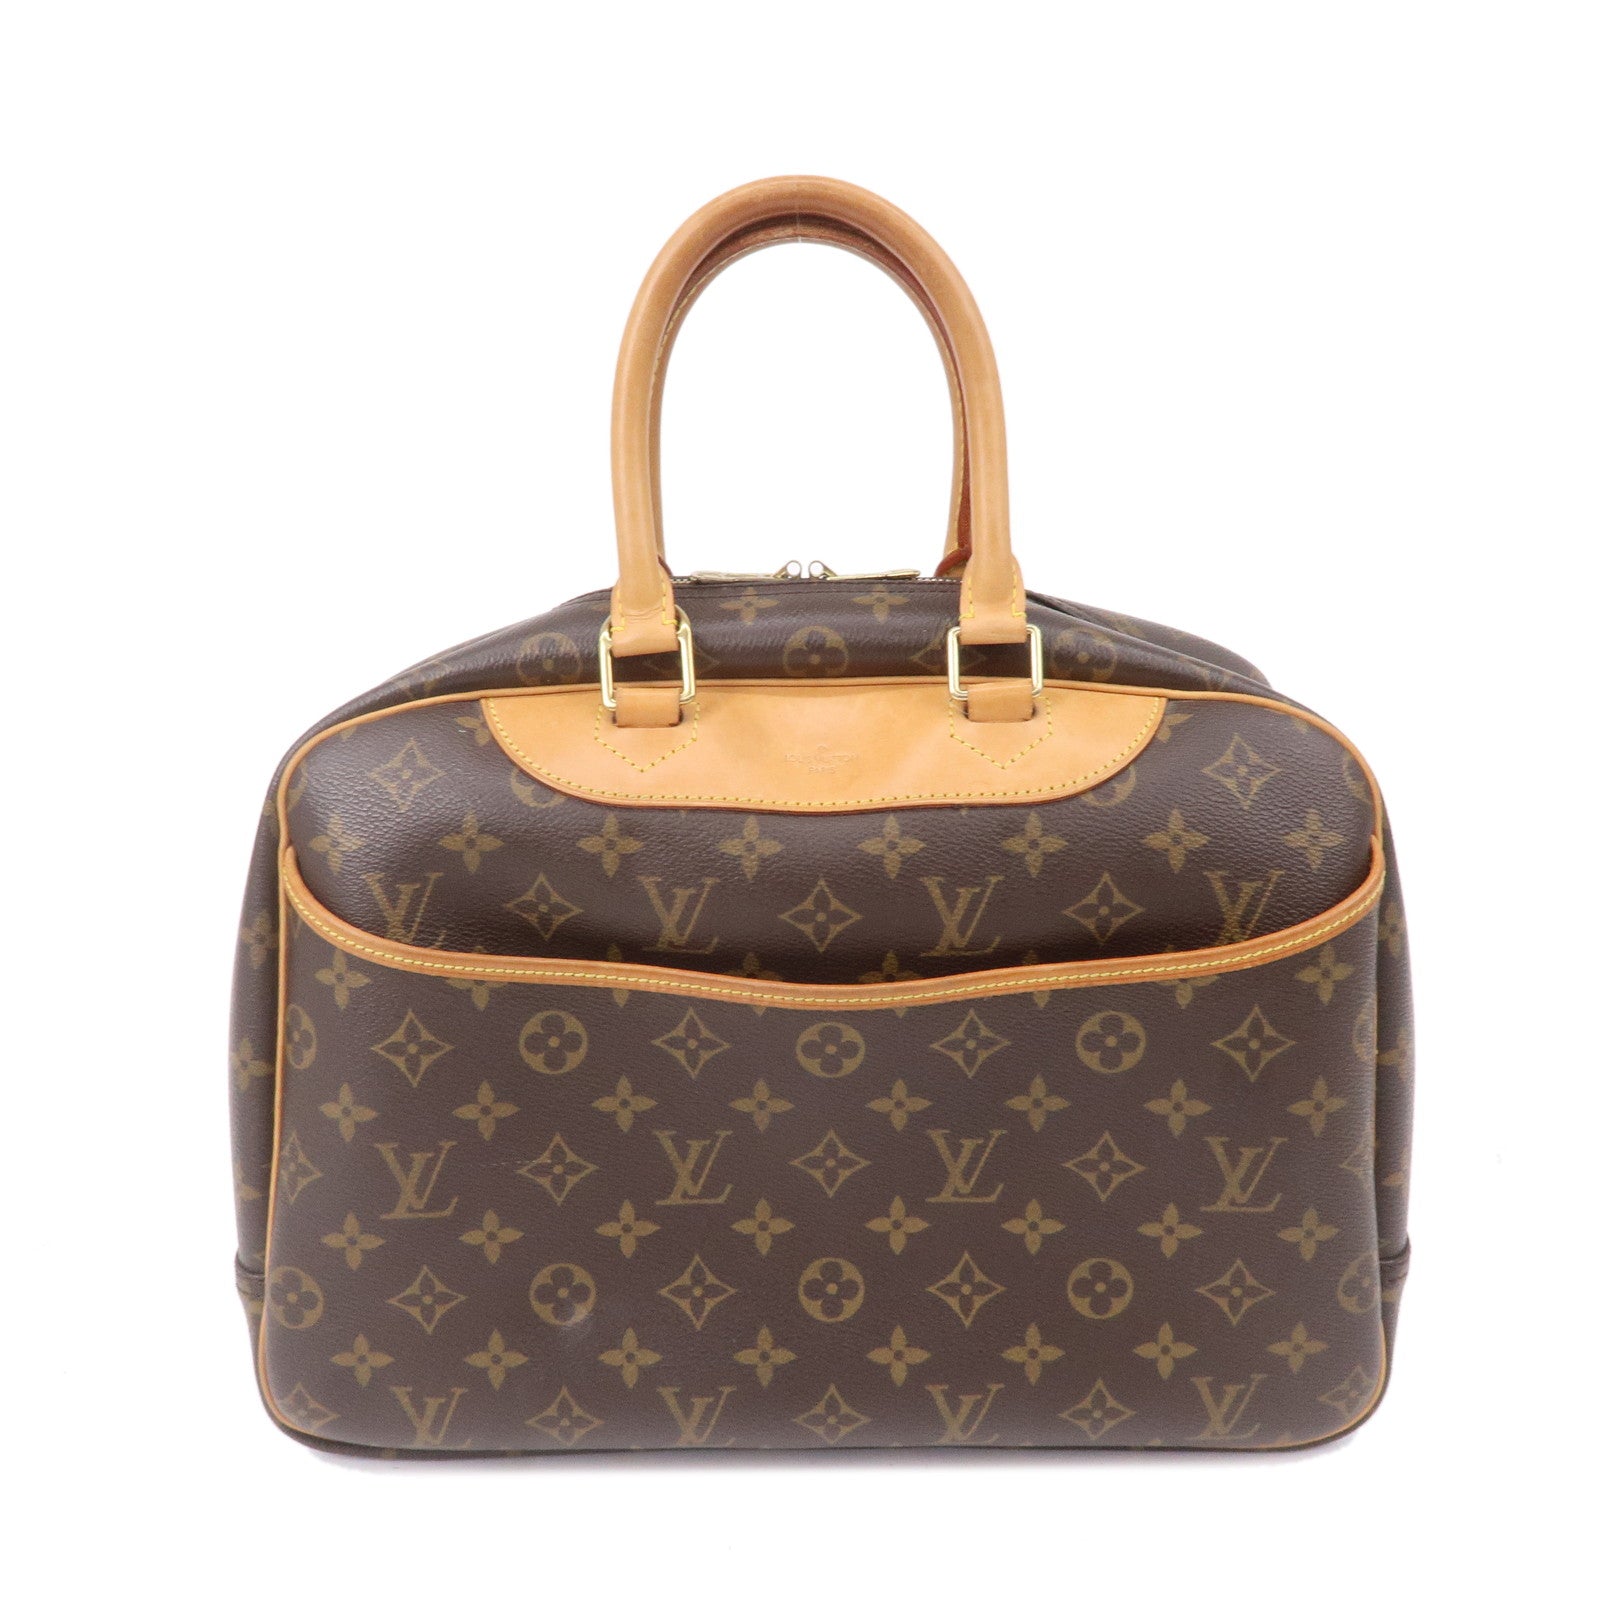 Louis Vuitton Deauville Handbag Damier Brown